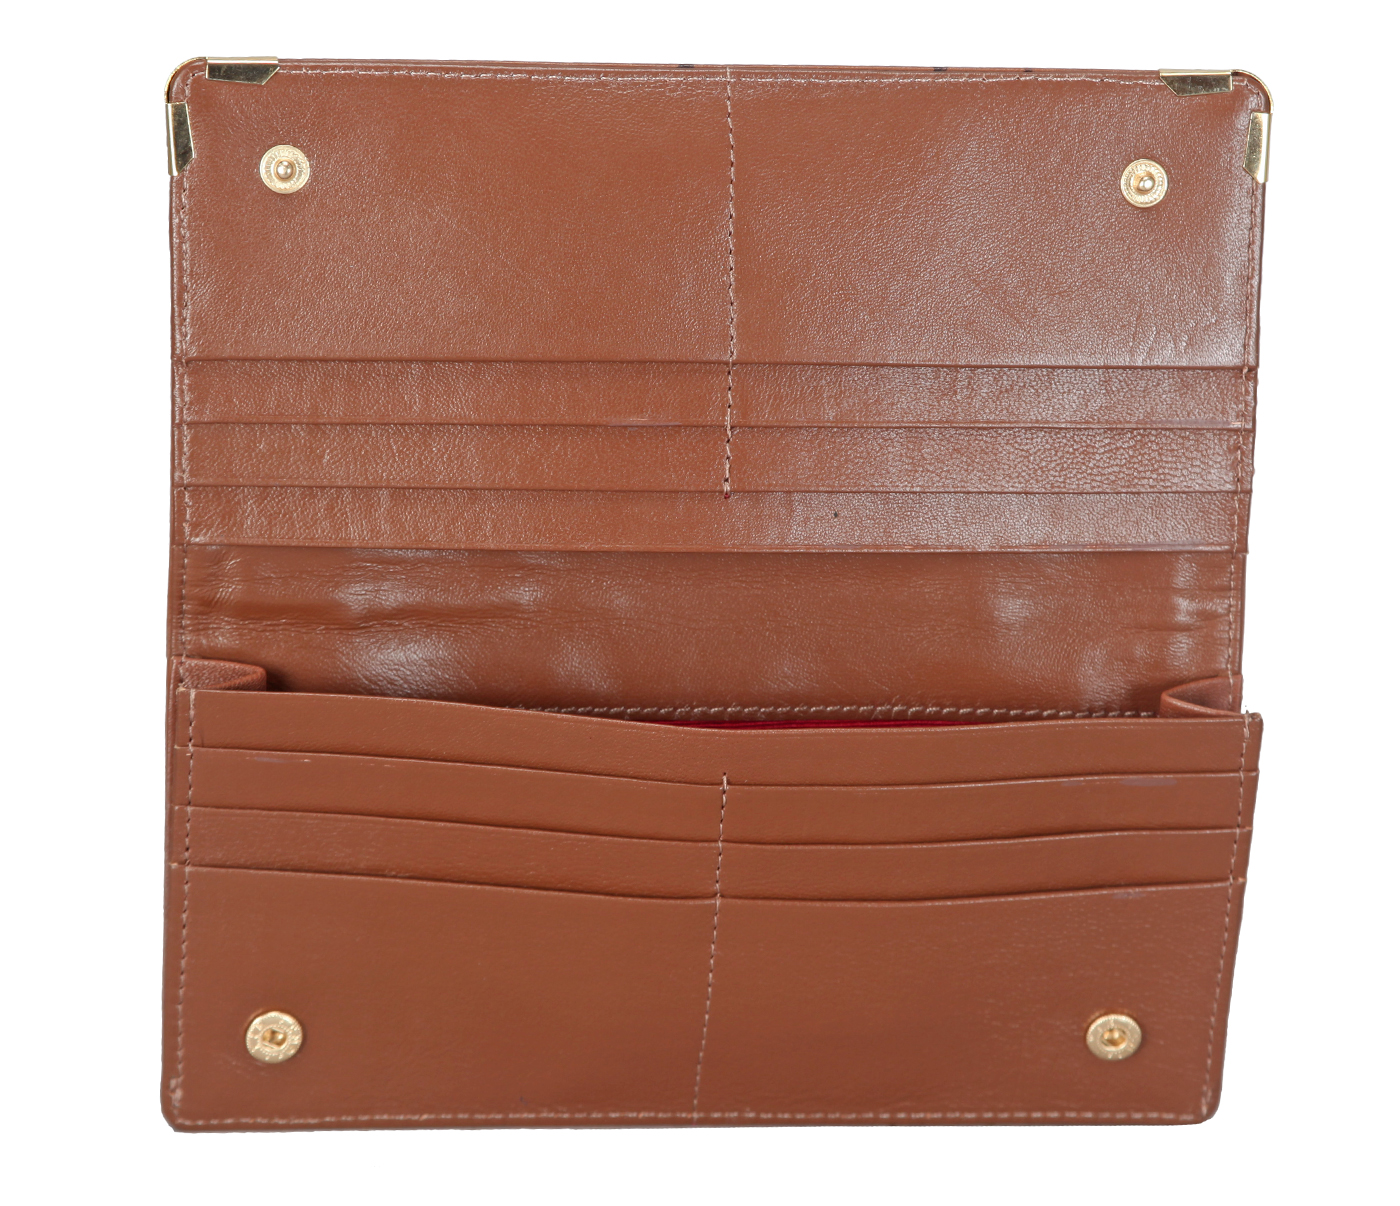 W314-Montana-Women's bifold button closing wallet in Genuine Leather - Tan